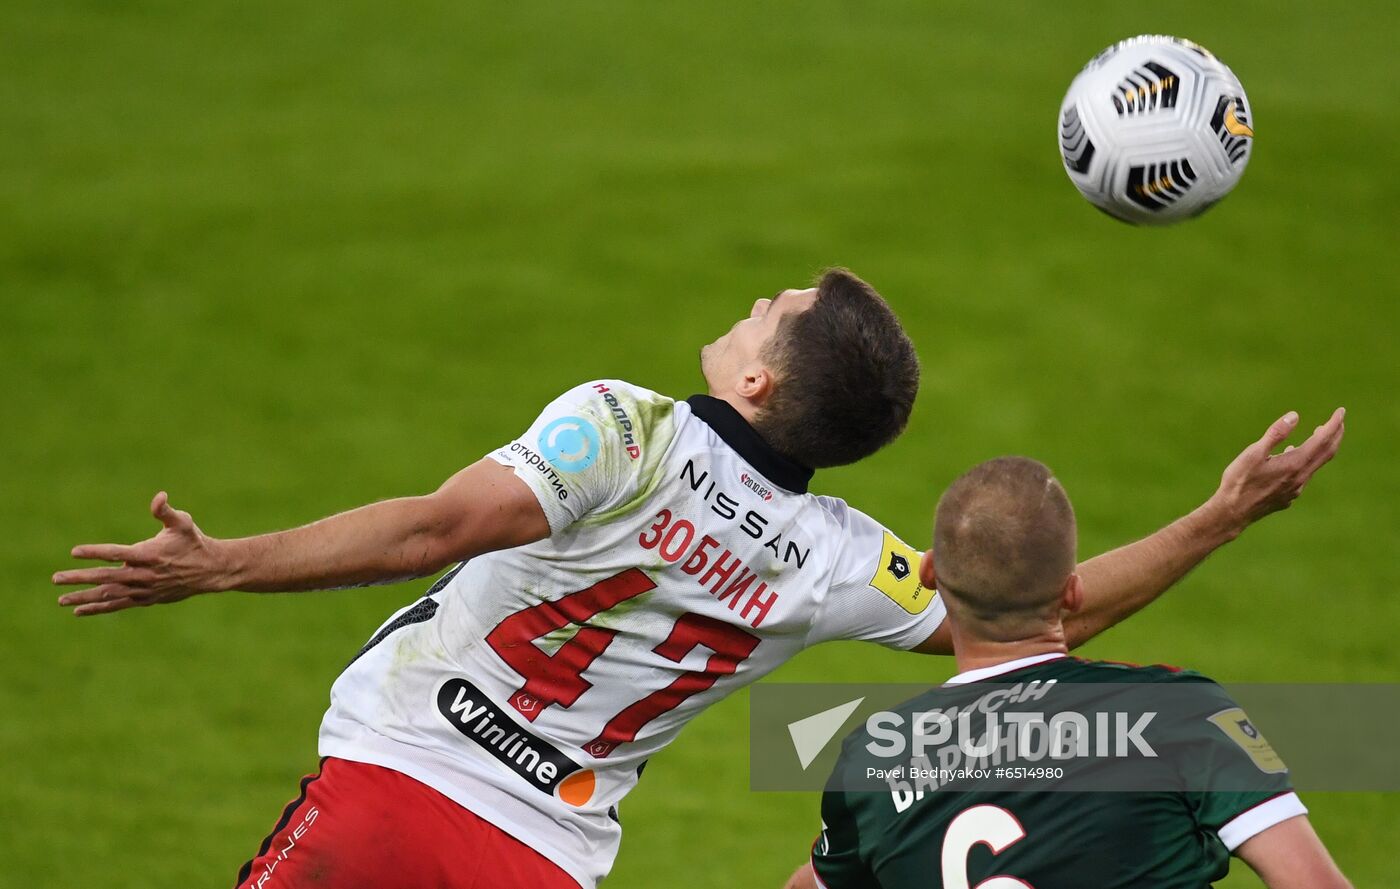 Russia Soccer Premier-League Lokomotiv - Spartak